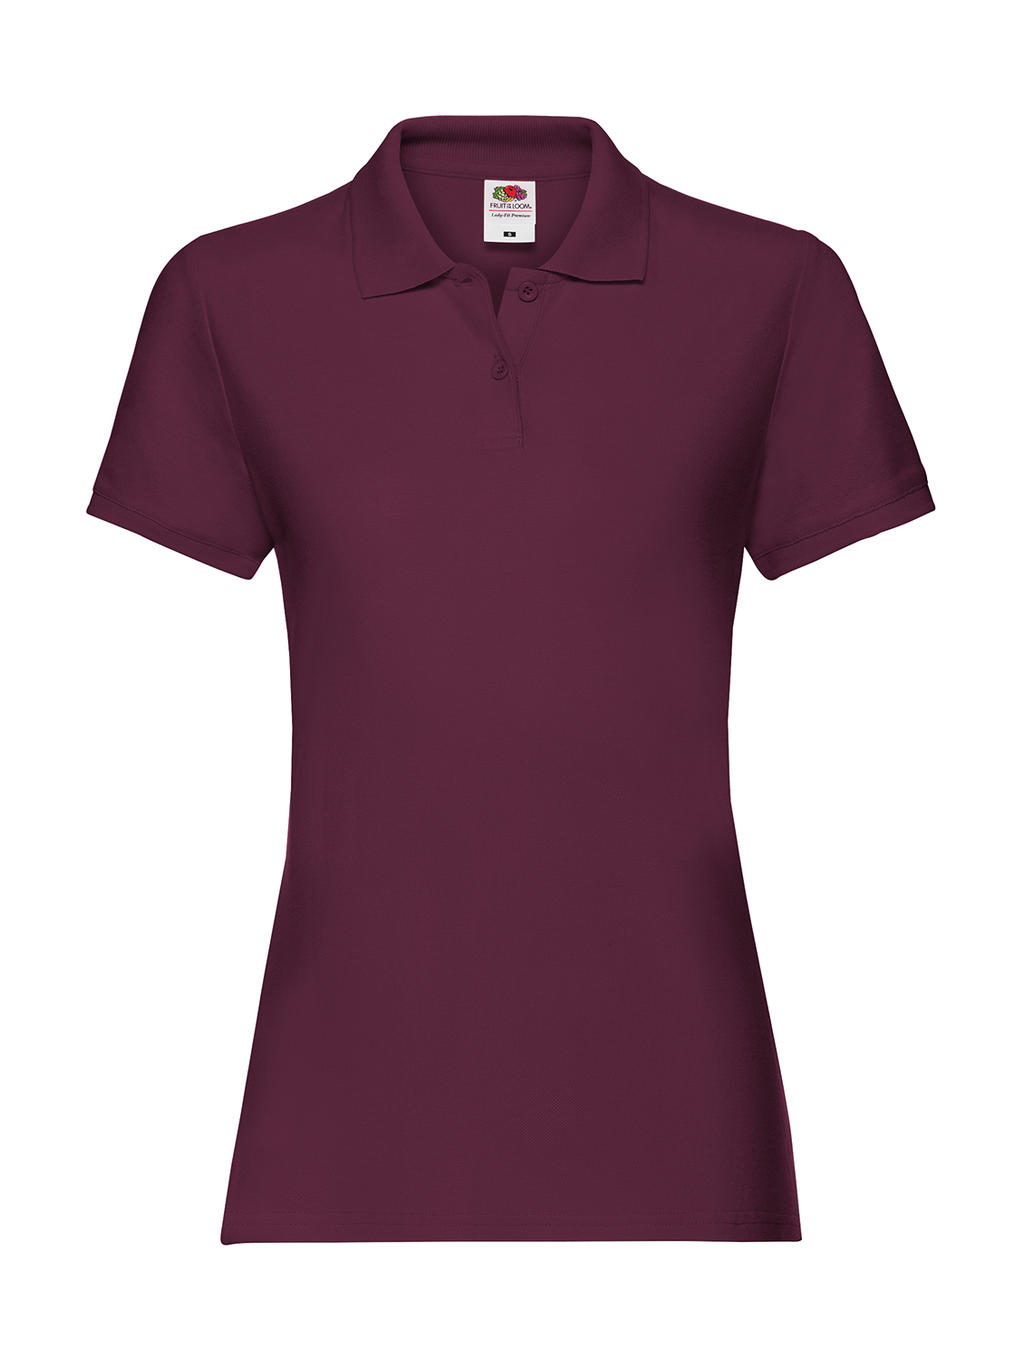  Ladies Premium Polo in Farbe Burgundy